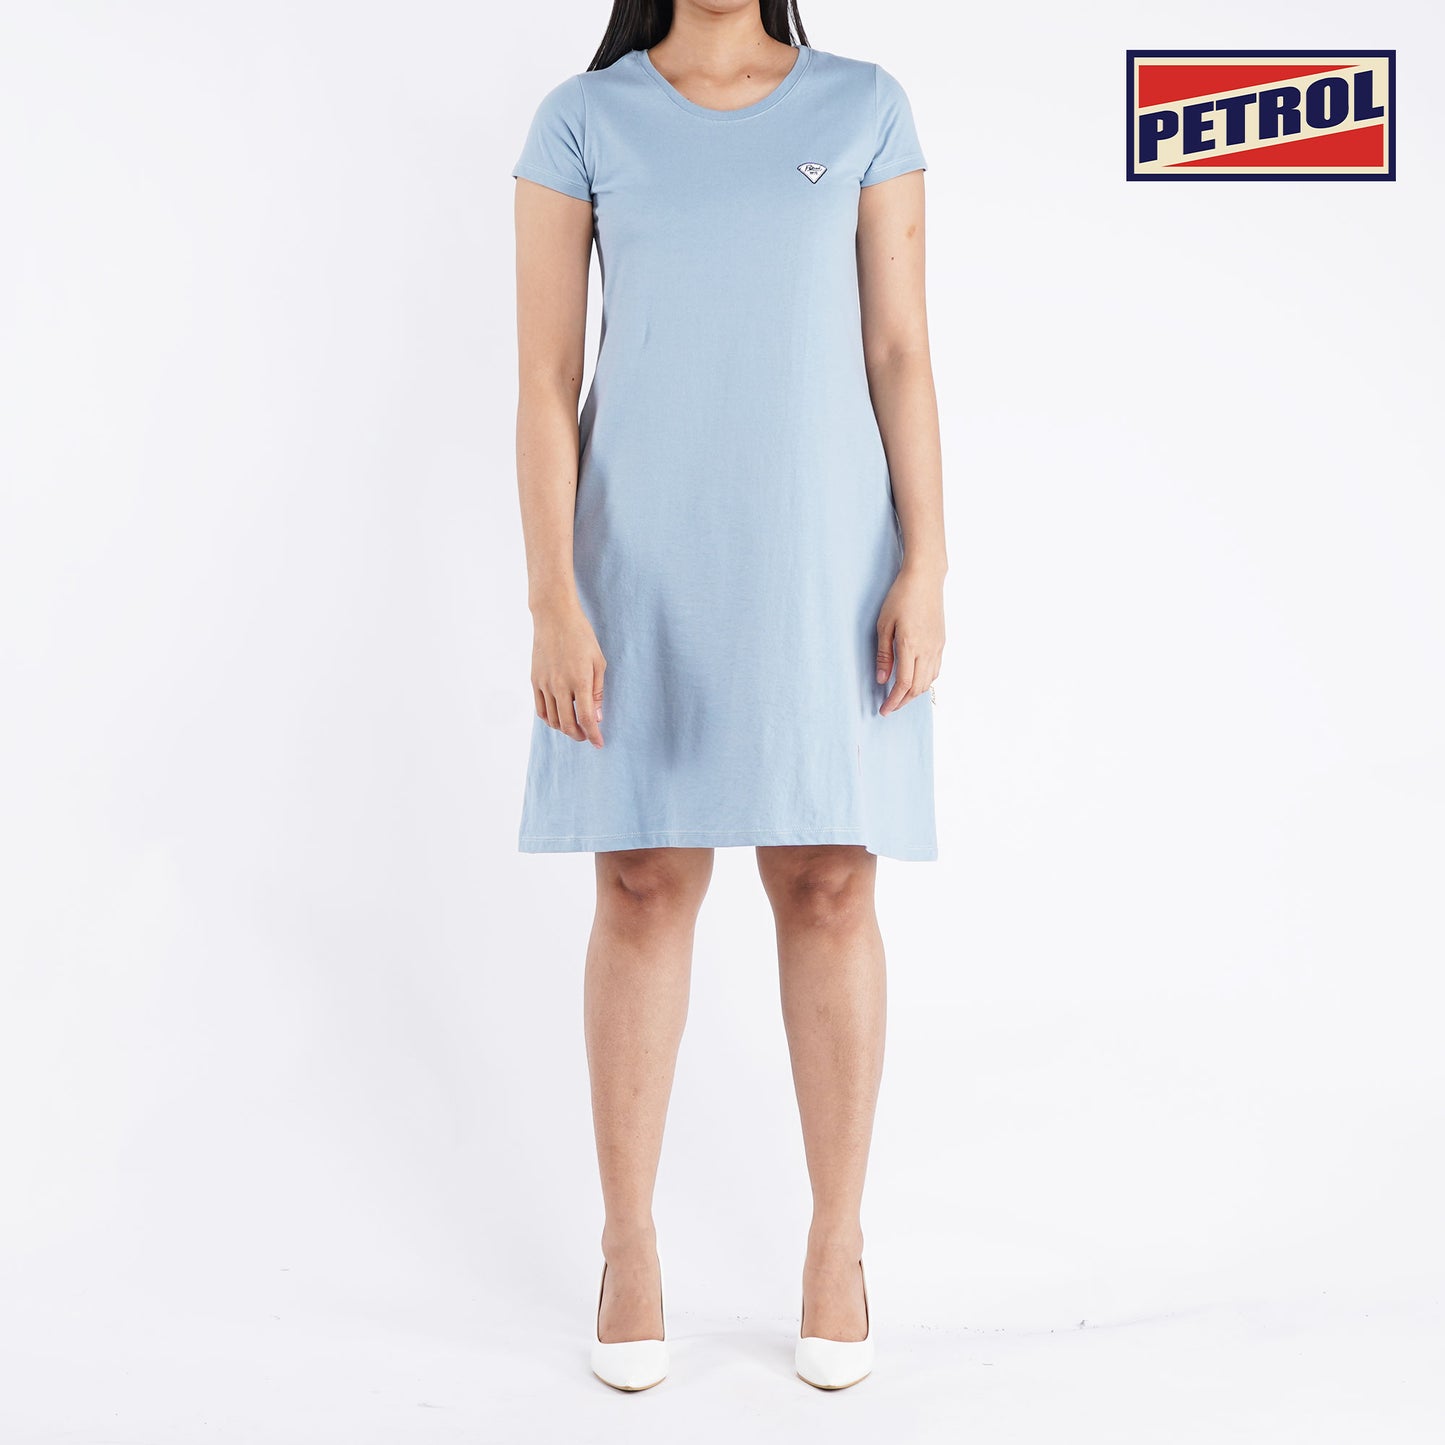 Petrol Ladies' Modified Dress Regular Fitting Blouse CVC Jersey Fabric Trendy fashion Casual Top Smoke Blue Dress for Ladies 141665 (Smoke Blue)